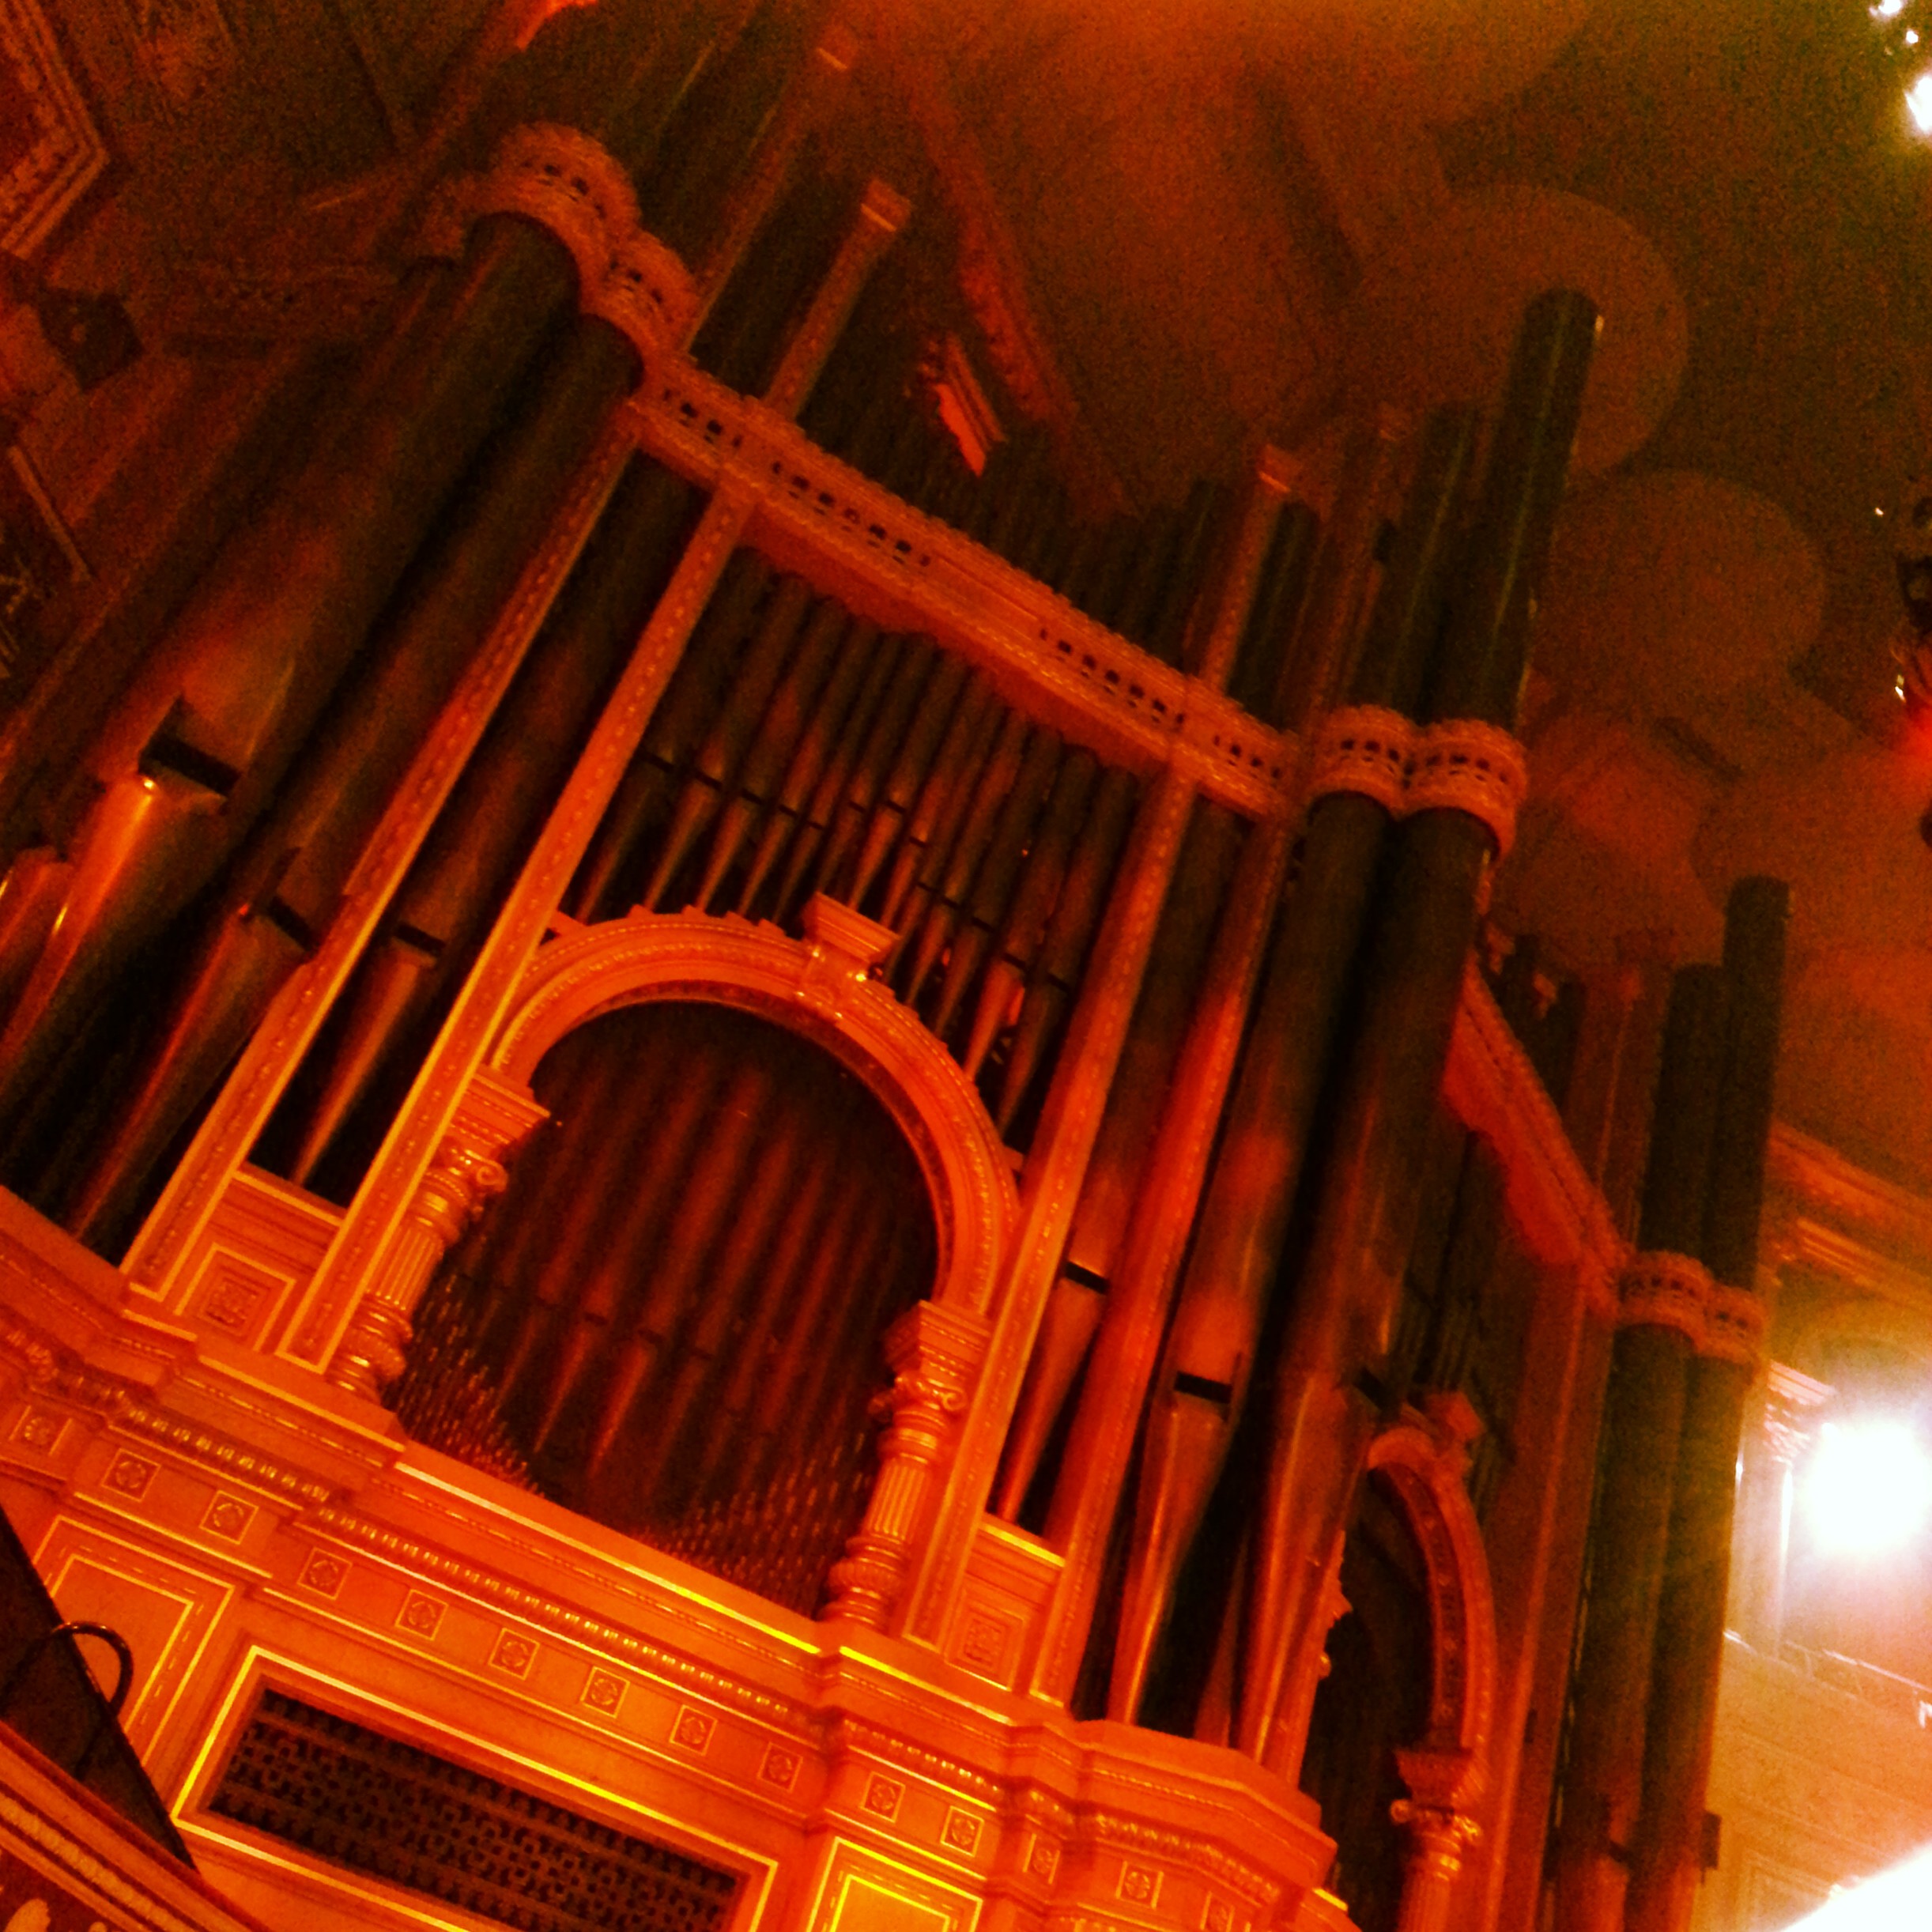 The Royal Albert Hall Organ